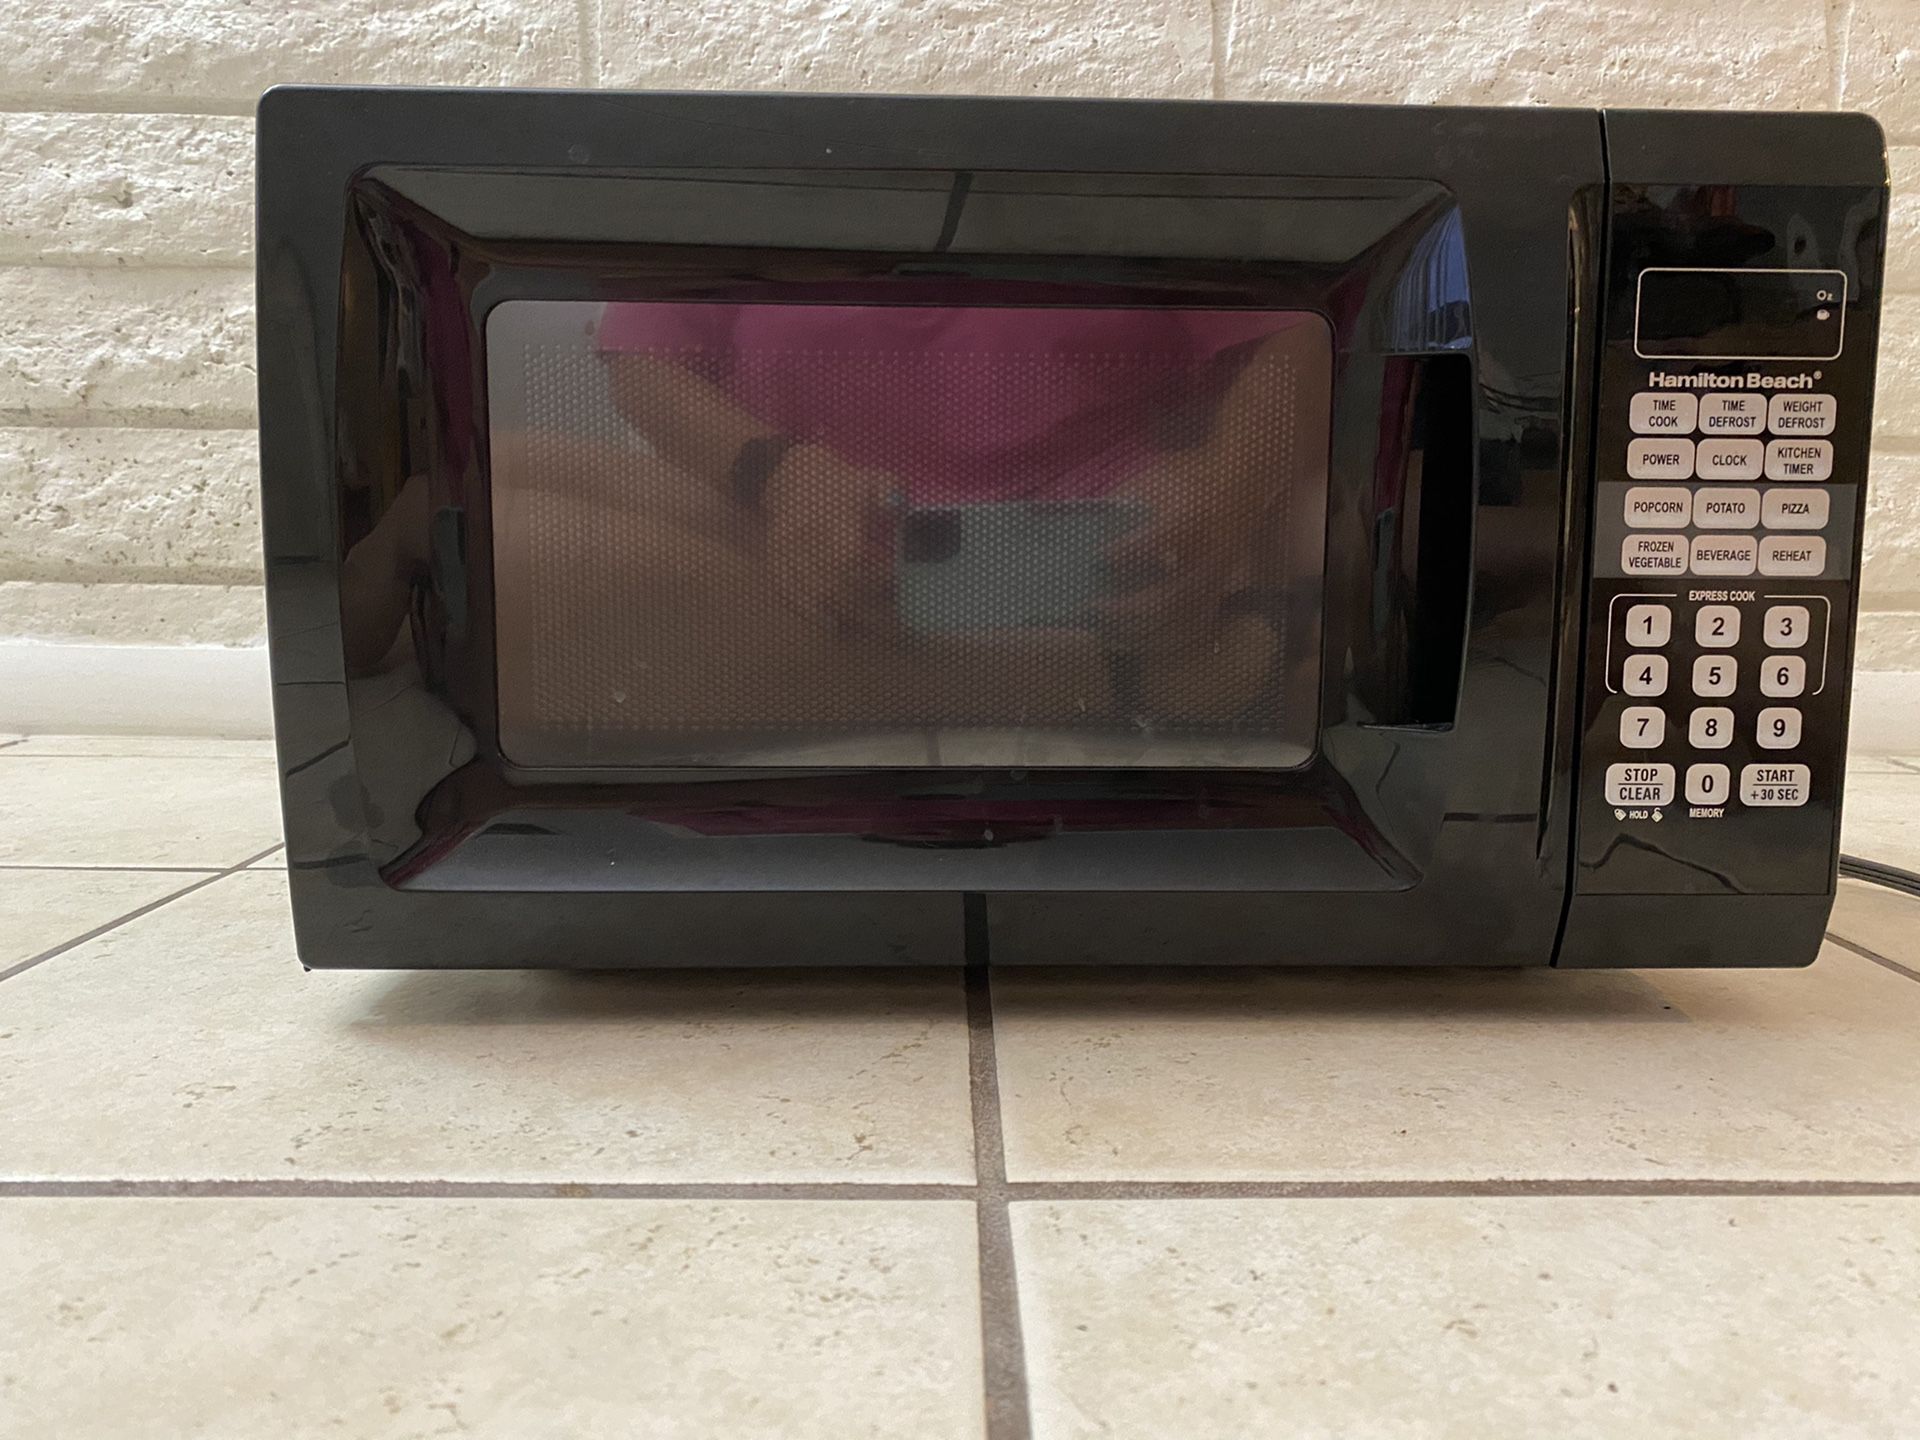 Hamilton Beach 0.7 Cu. Ft. Black Microwave Oven